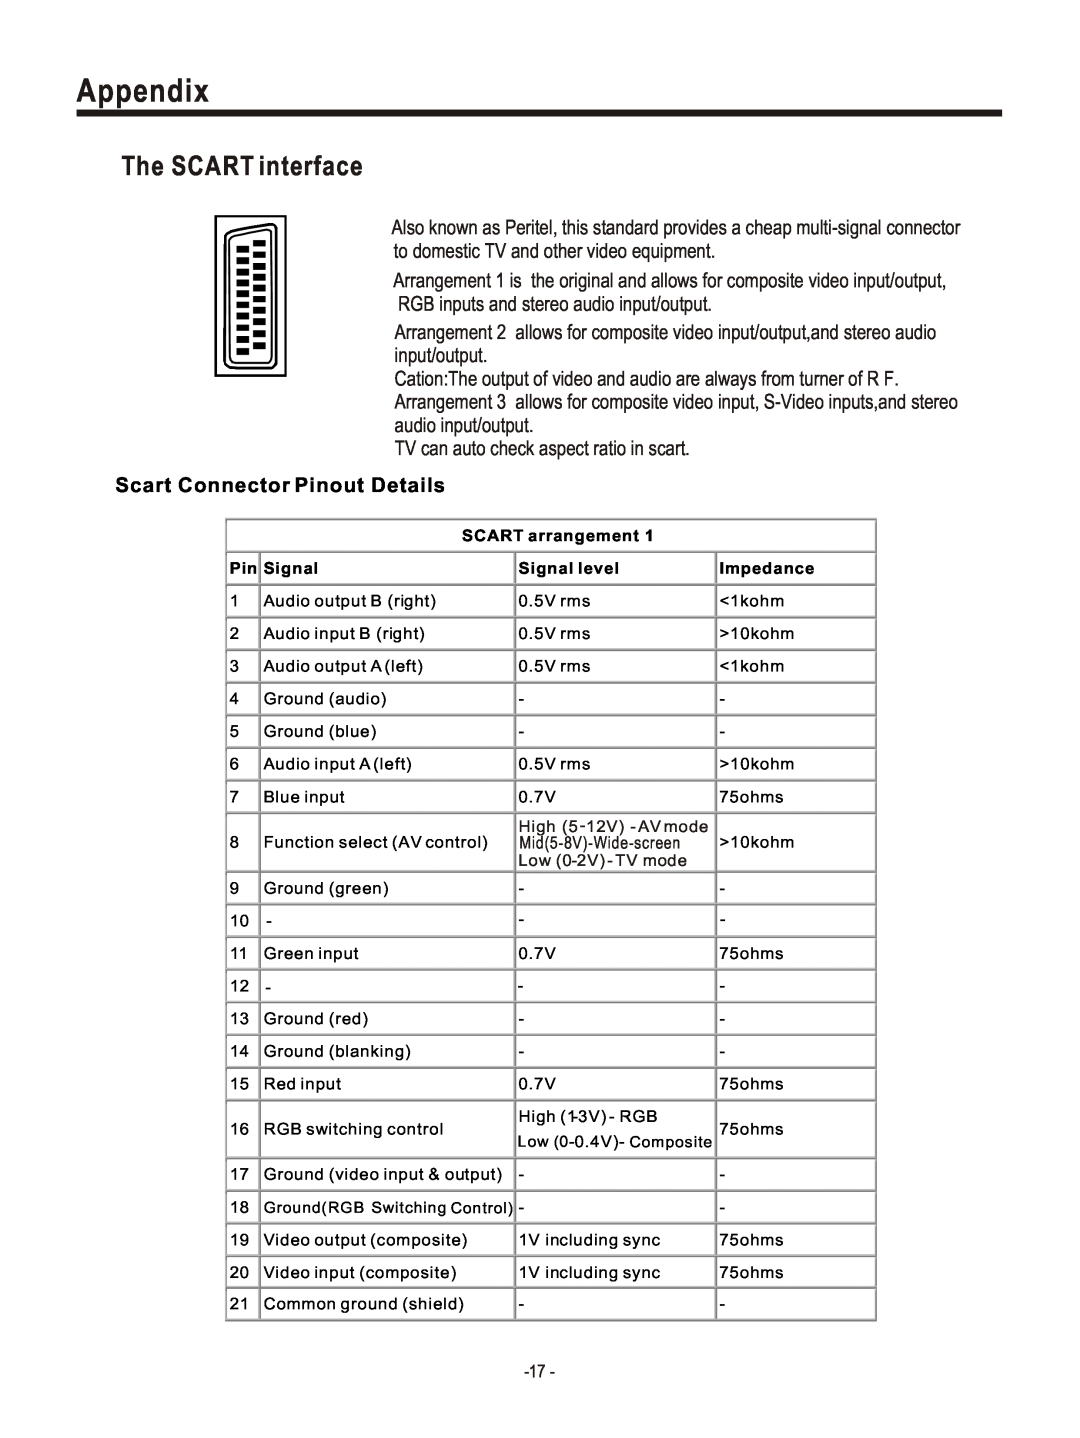 Hisense Group PDP4220EU user manual Appendix, The SCART interface, Scart Connector Pinout Details 